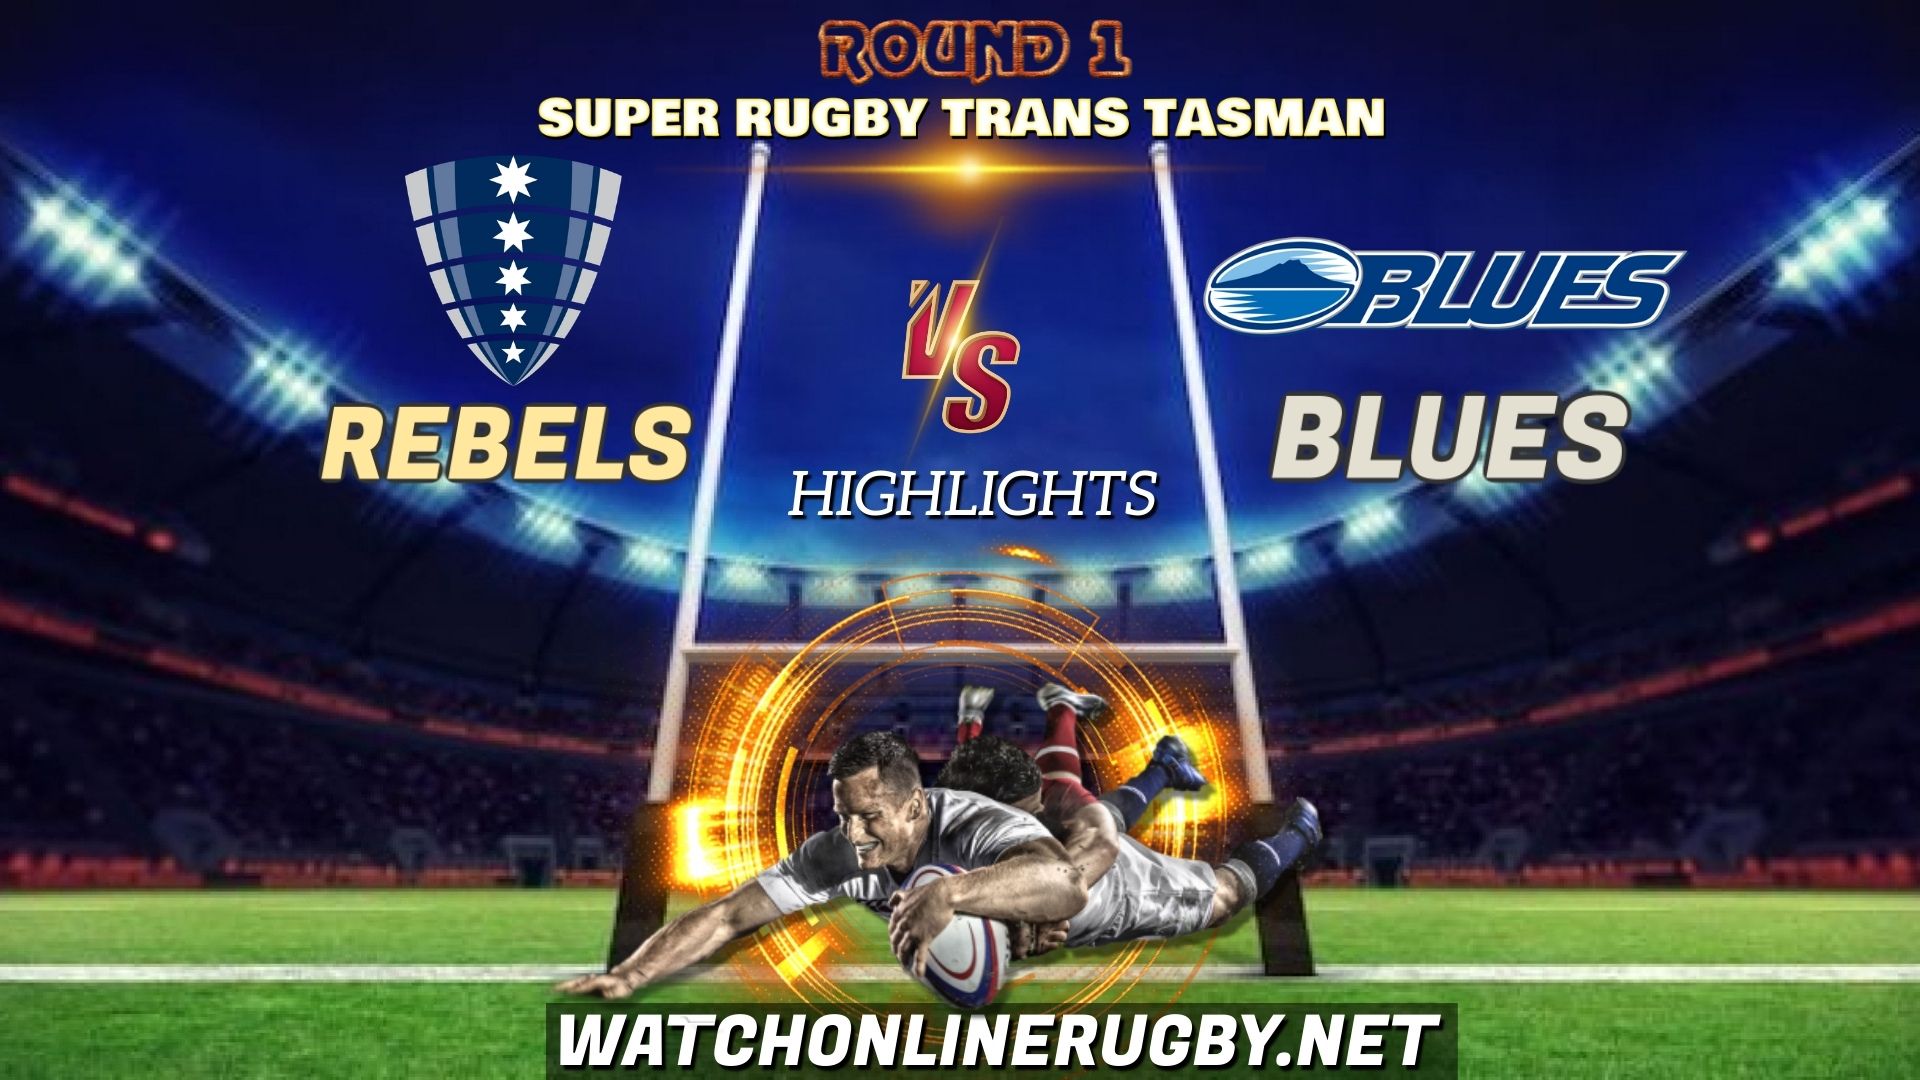 Rebels Vs Blues Super Rugby Trans Tasman 2021 RD 1